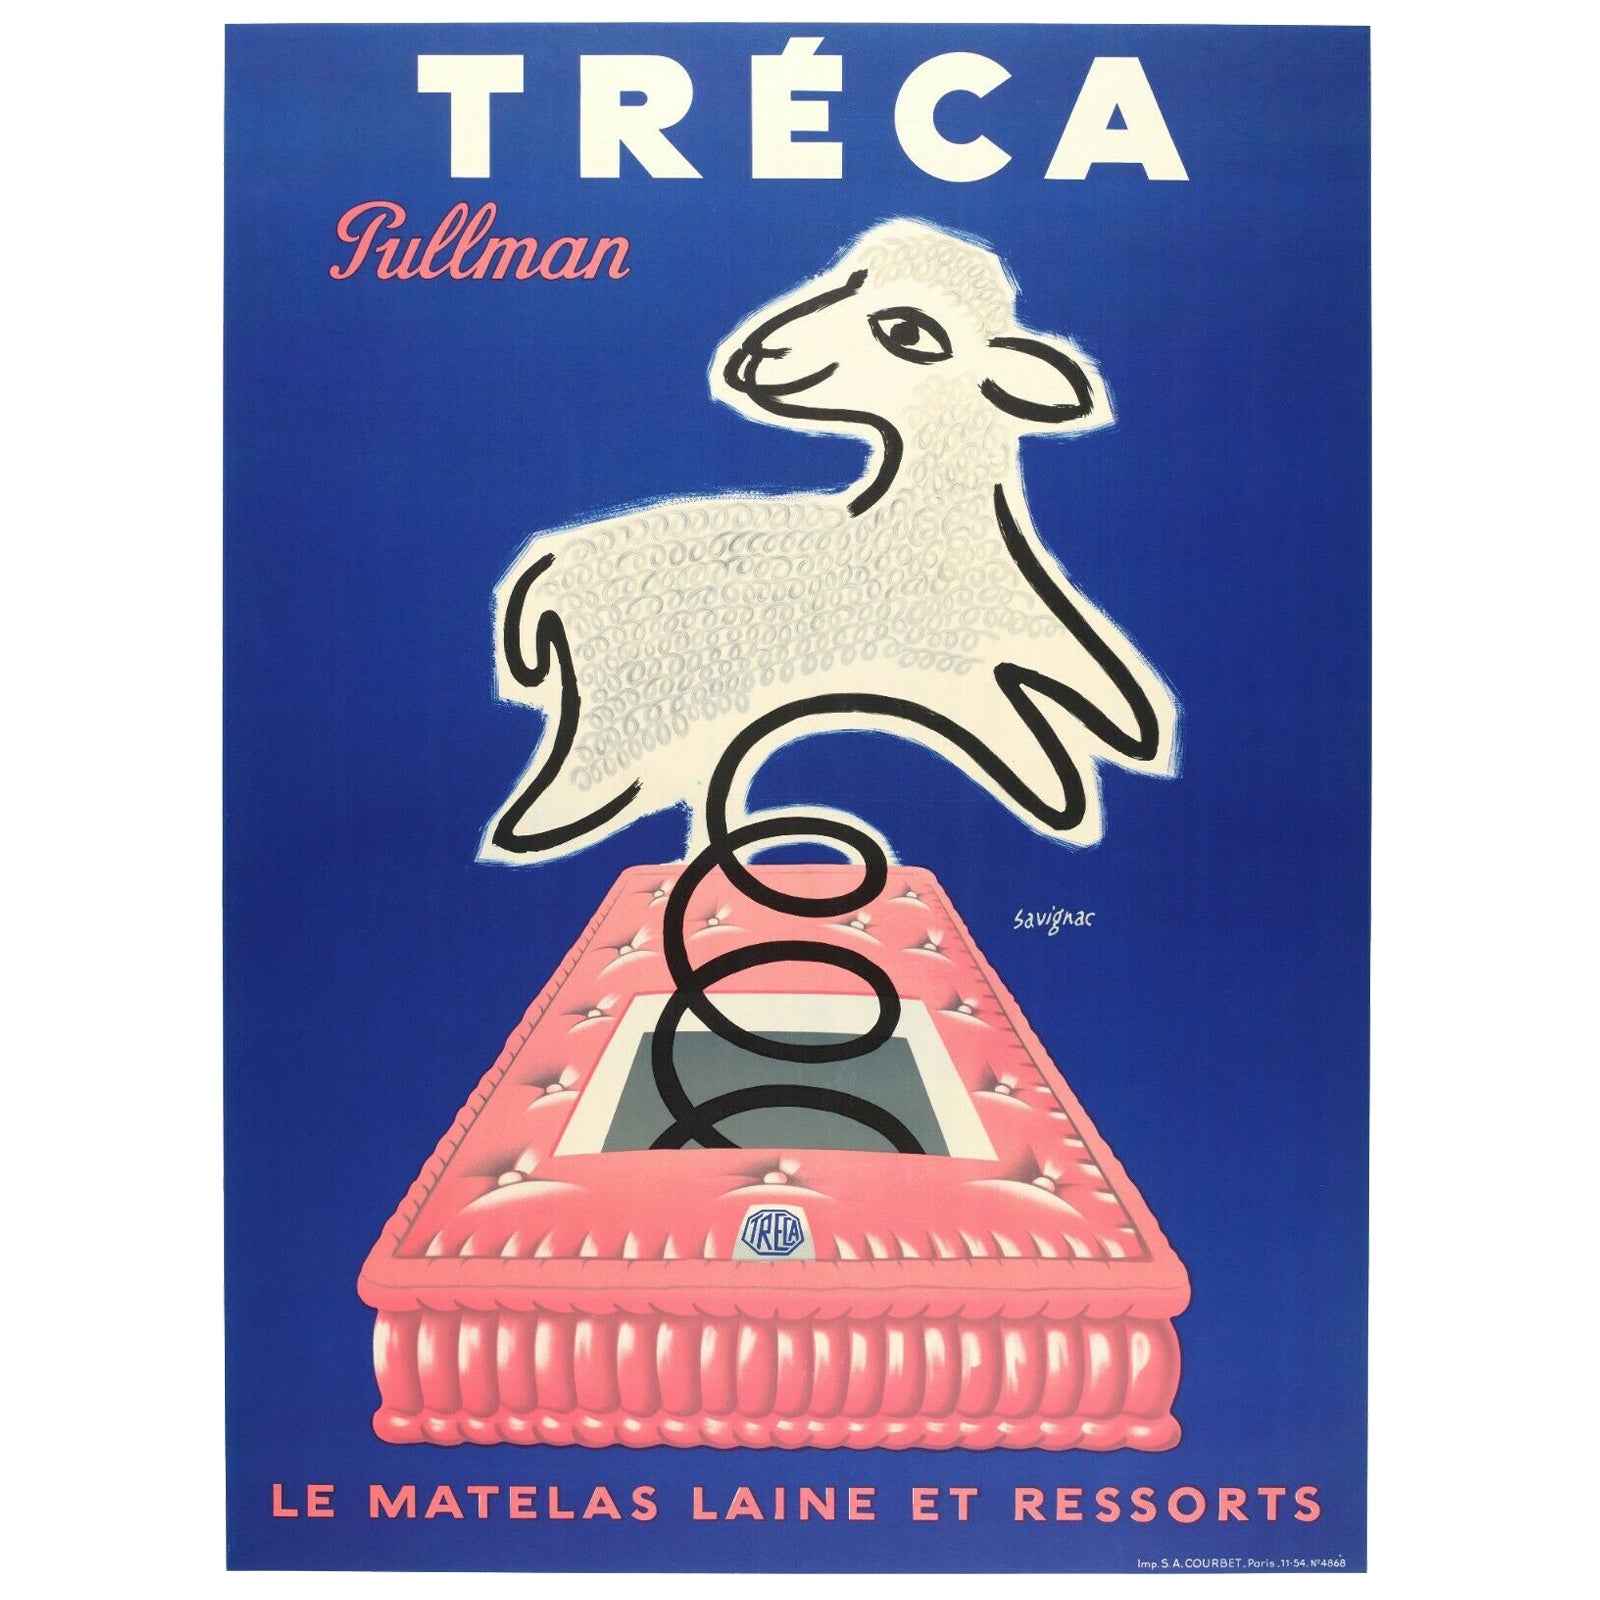 Original Vintage Poster-Raymond Savignac-Treca-Pullman-Matelas, 1954 For Sale